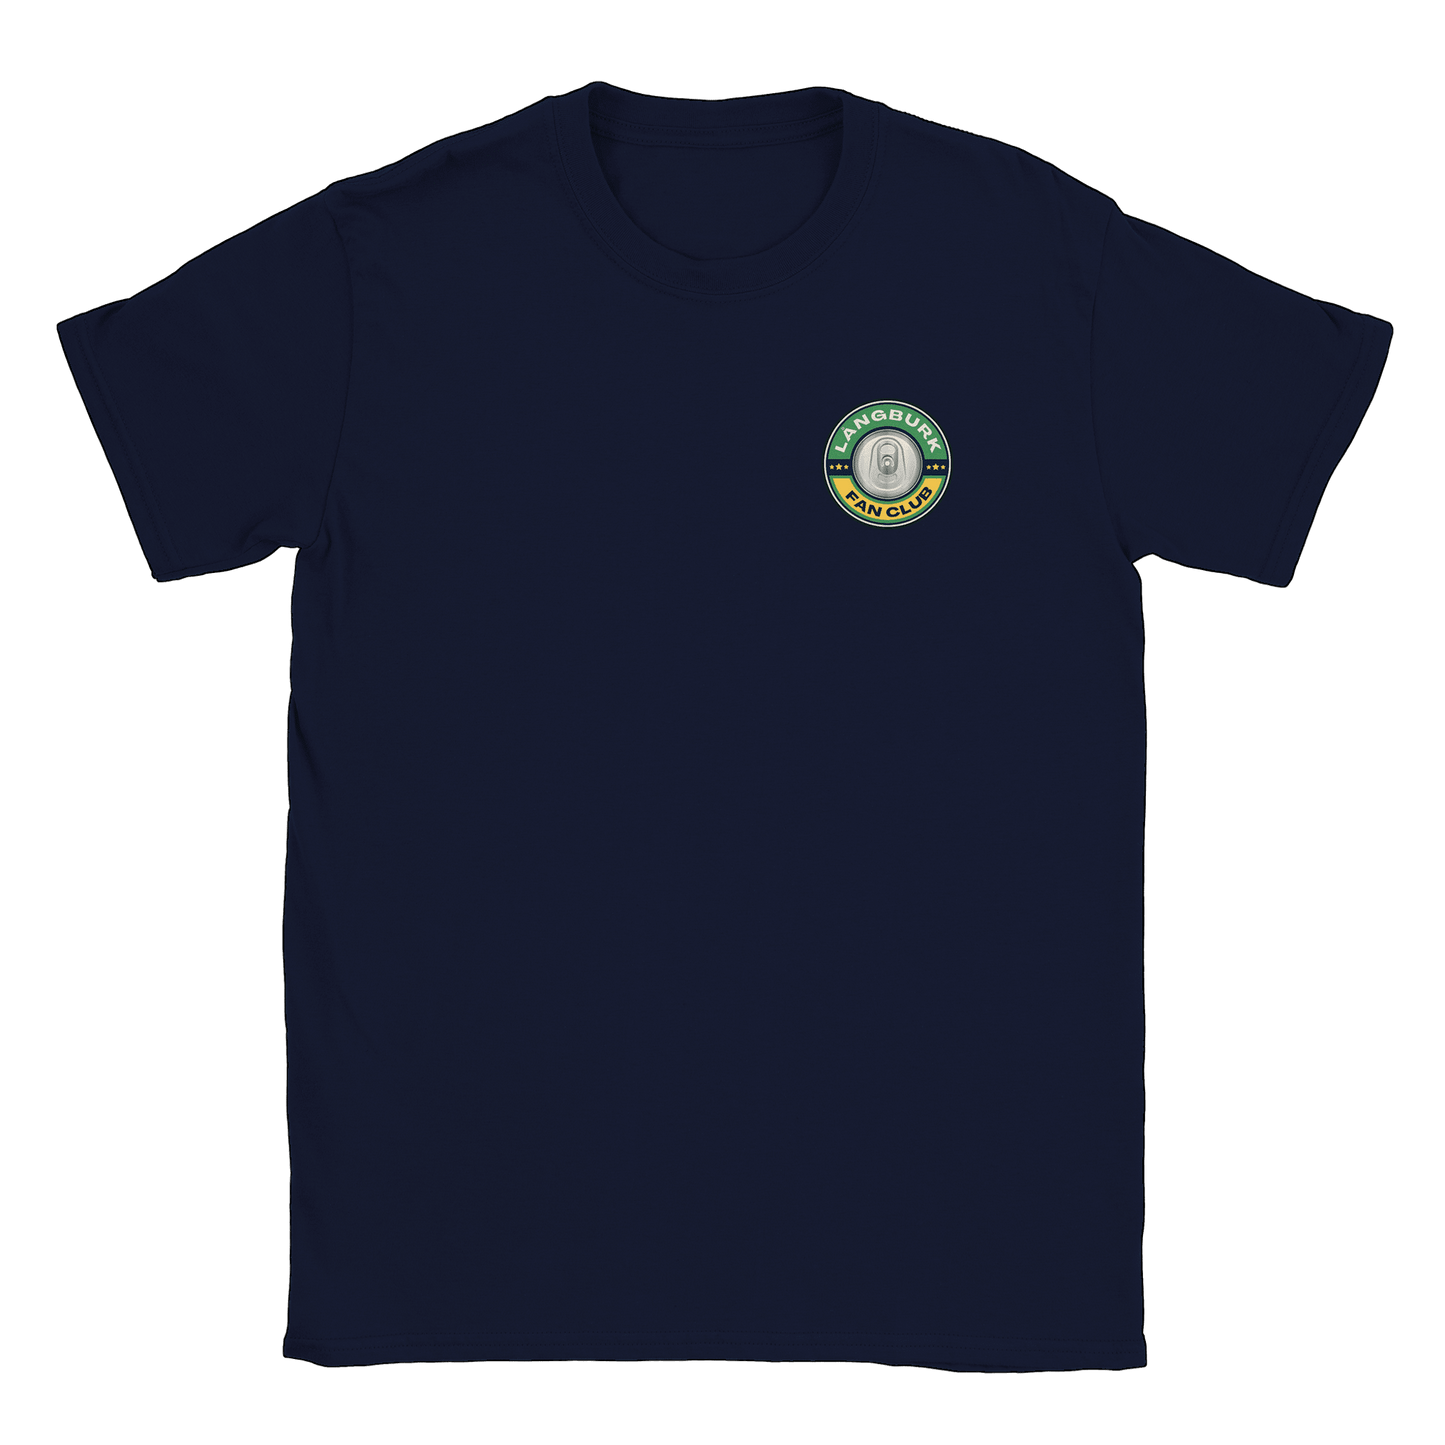 Långburk Fan Club liten - T-shirt Navy